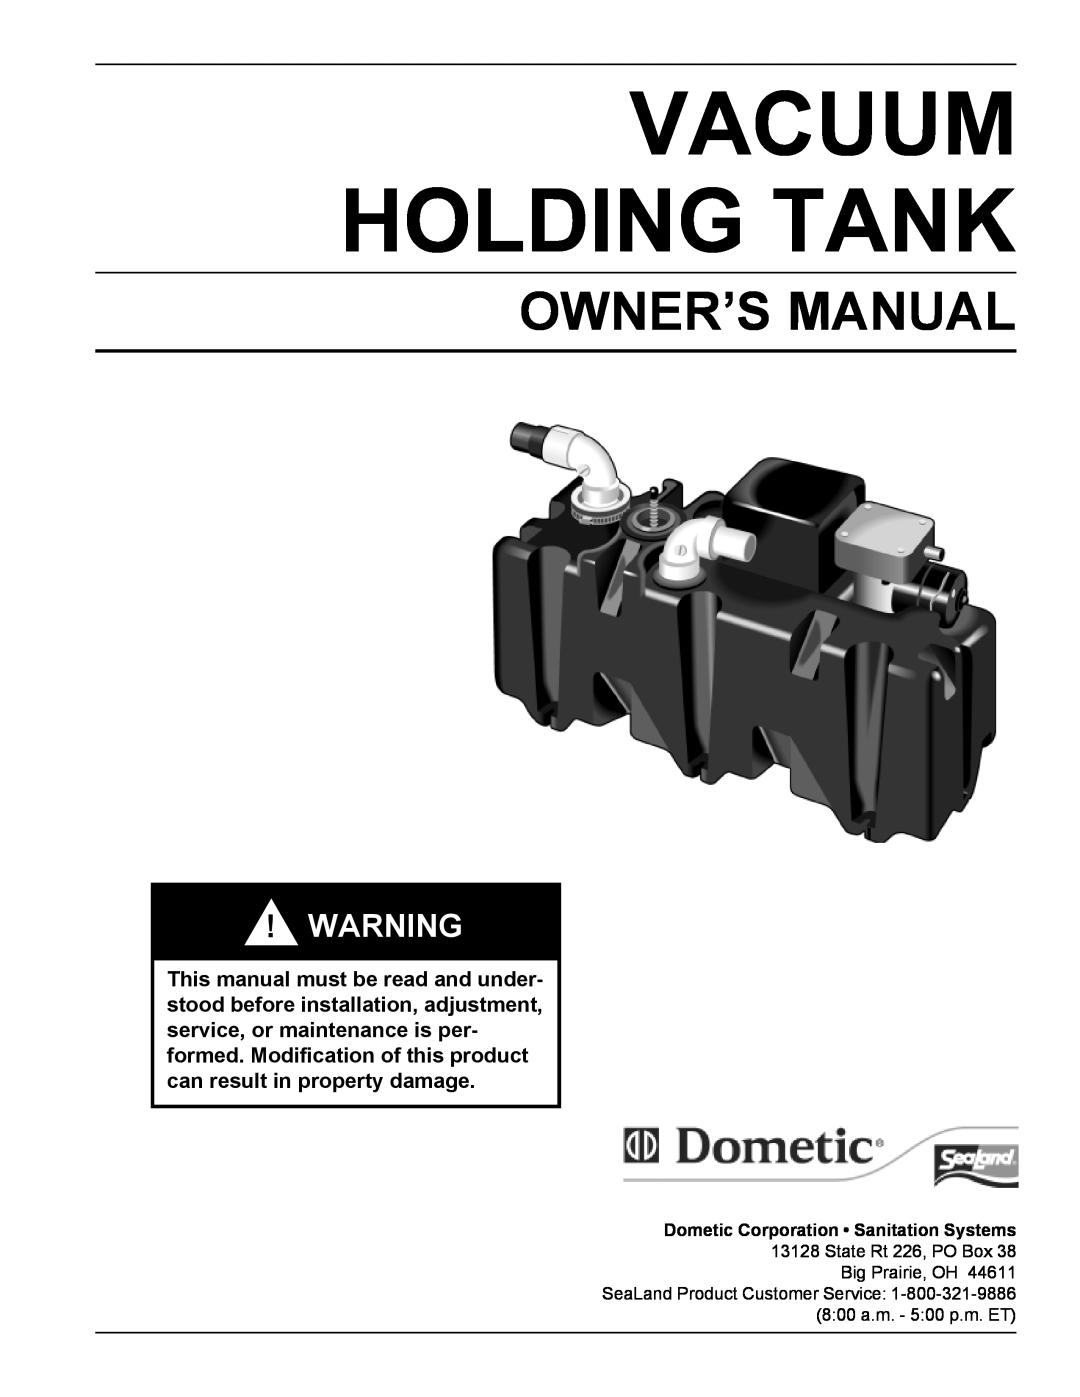 SeaLand VACUUM HOLDING TANK owner manual Dometic Corporation Sanitation Systems, Vacuum Holding Tank 